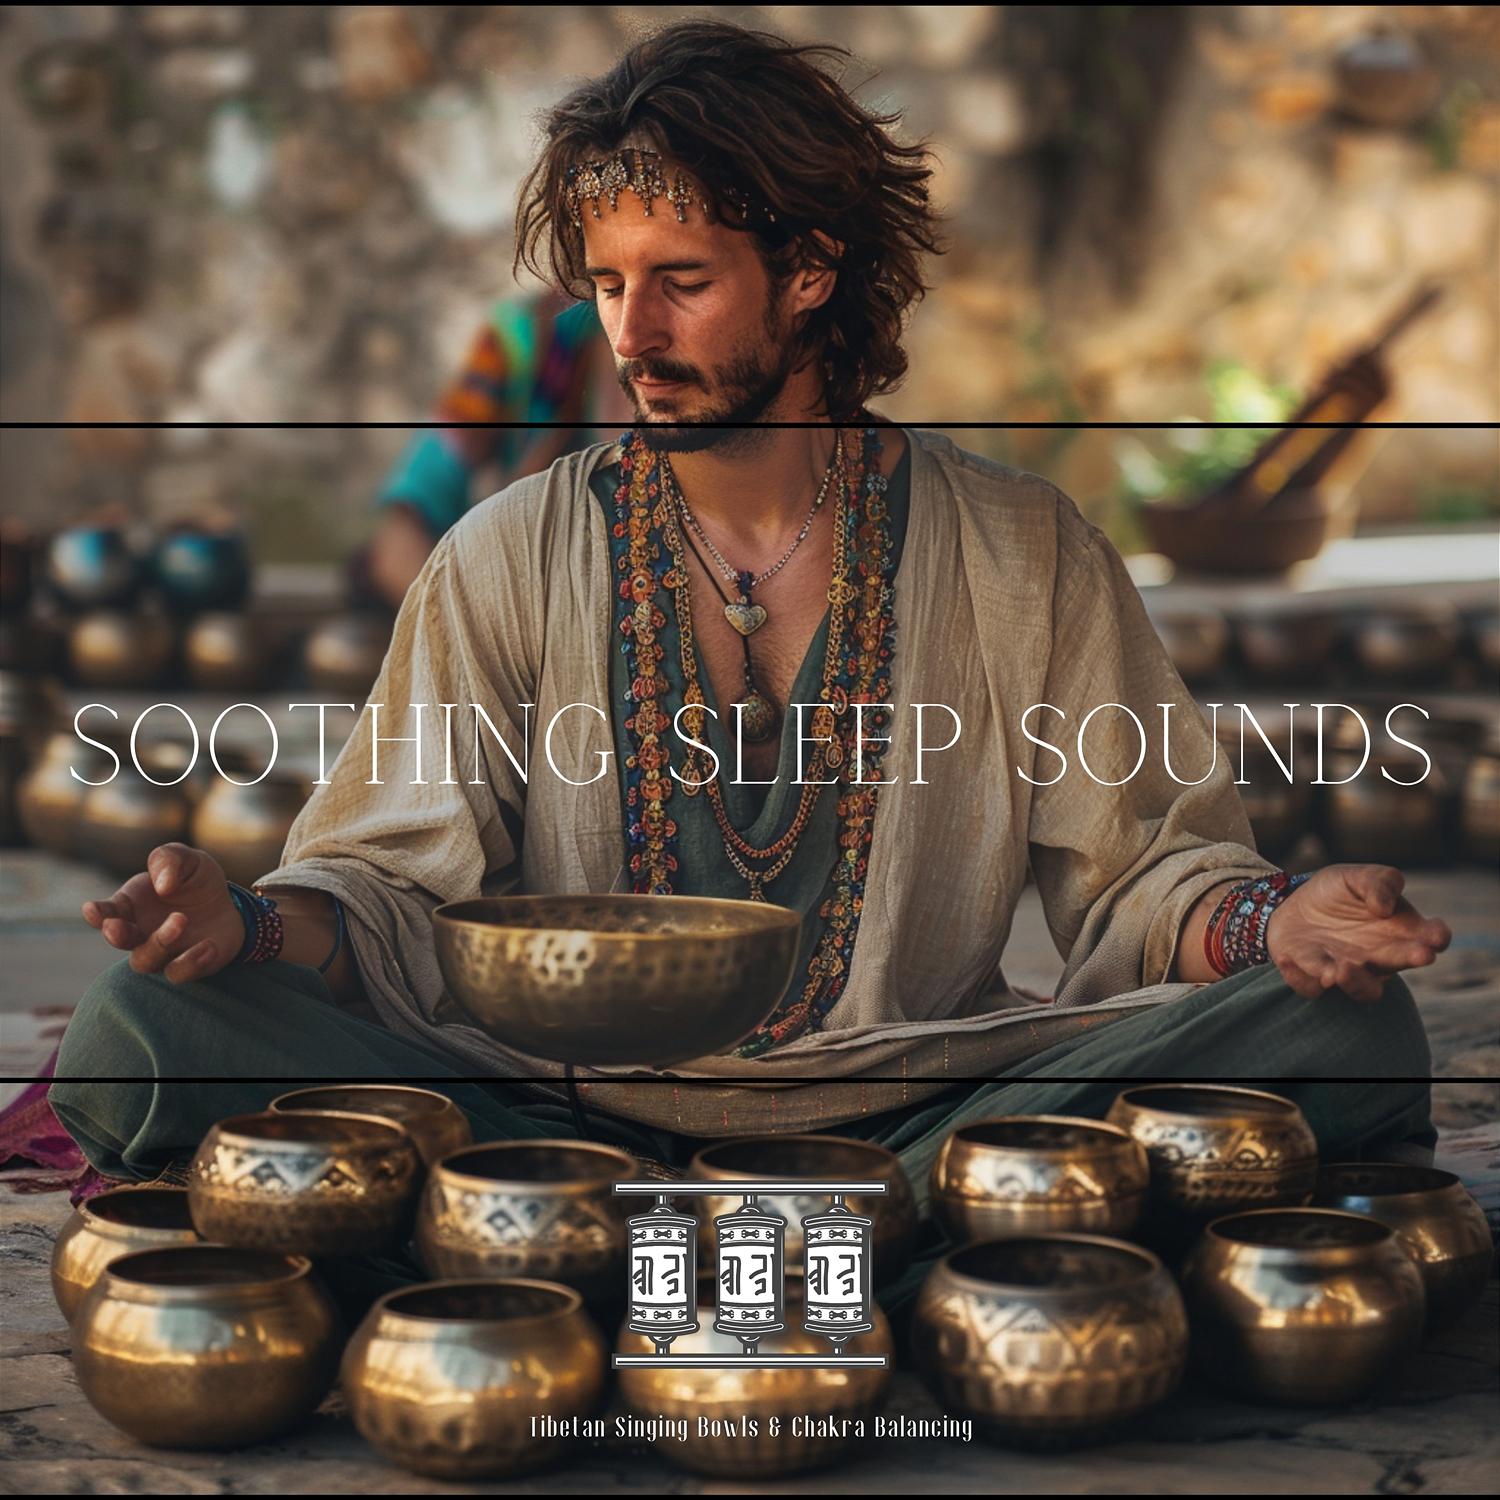 Tibetan Singing Bowls & Chakra Balancing - The Business of Yoga (Yoga at Work)